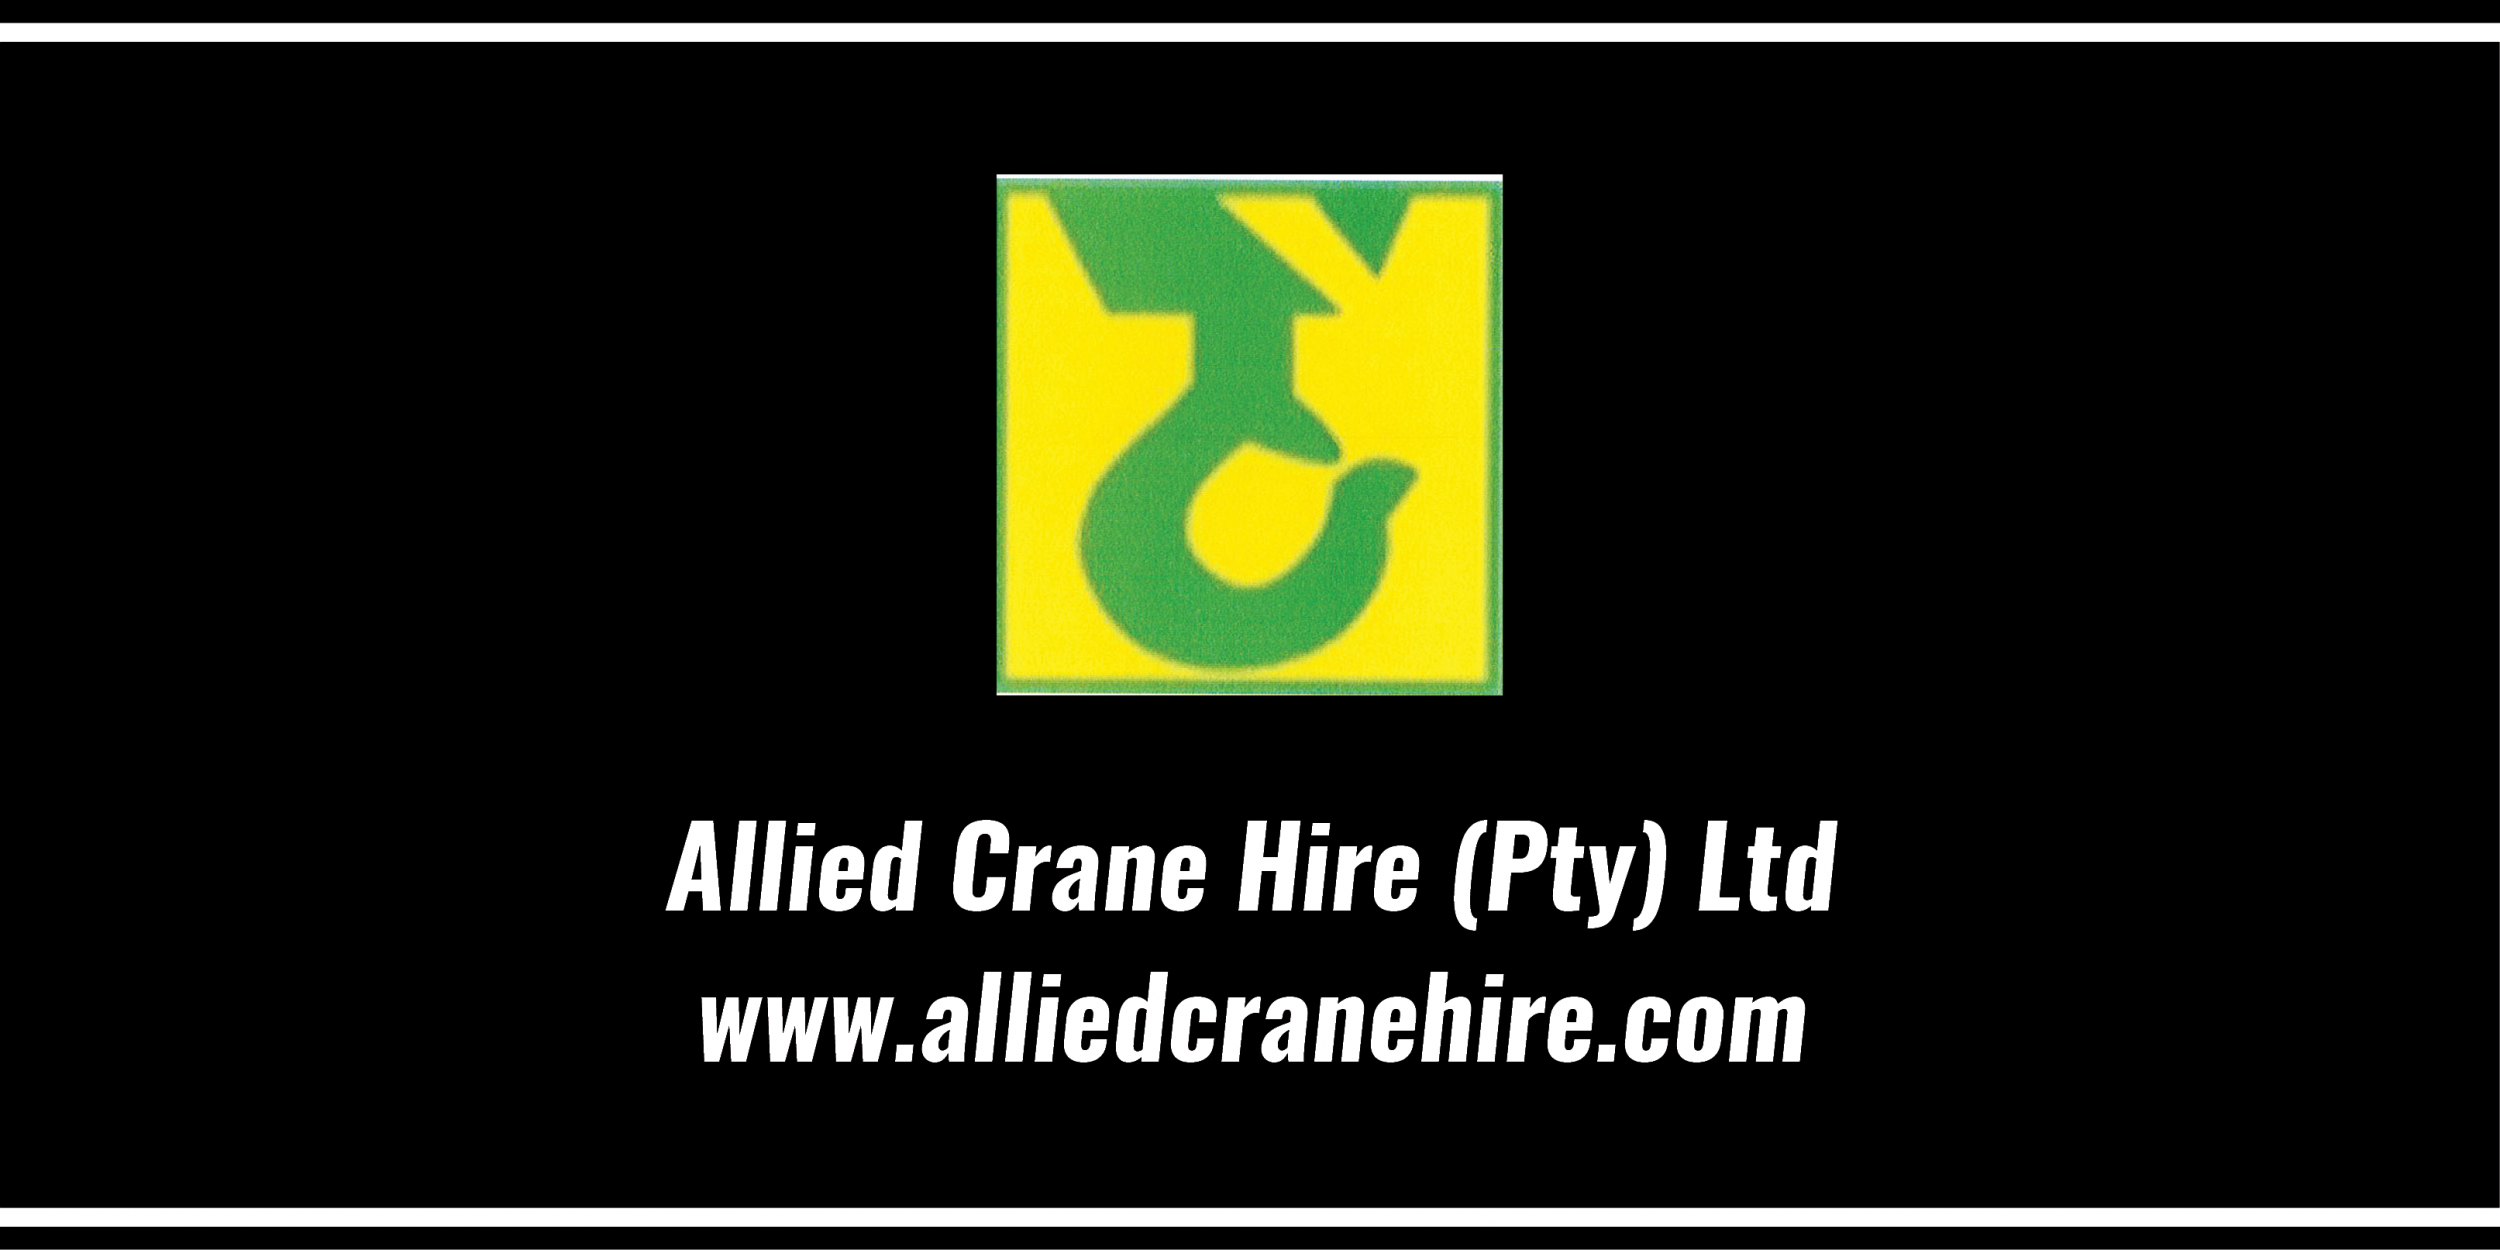 Allied Crane Hire (Pty) Ltd